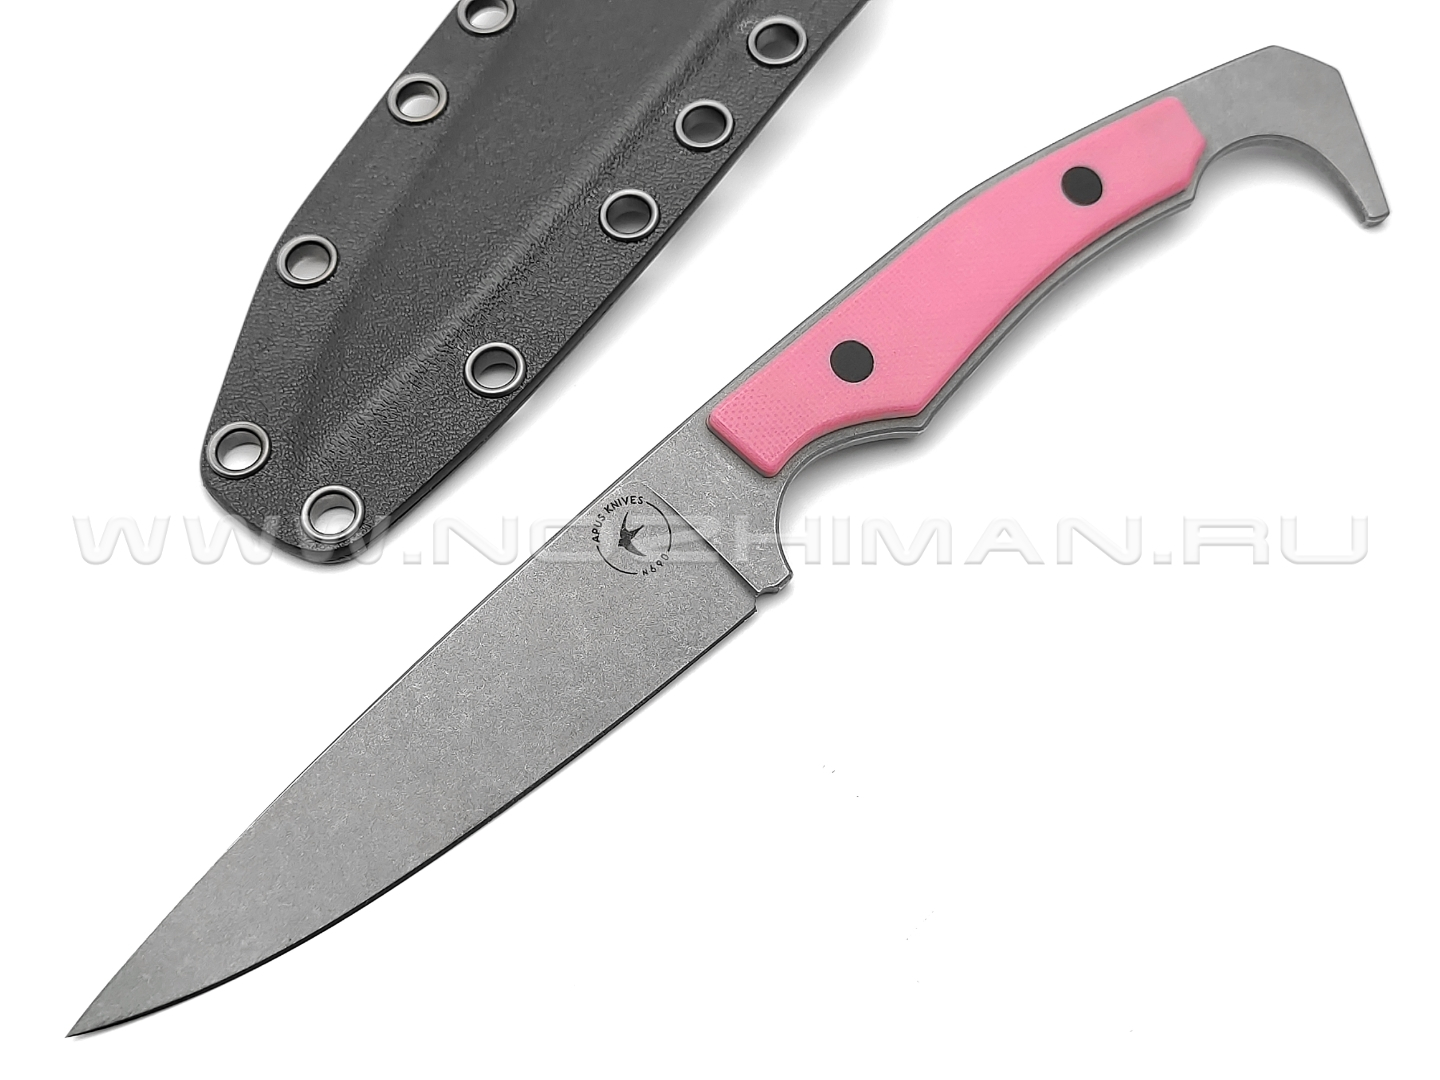 Apus Knives нож Trigger сталь N690, рукоять G10 pink